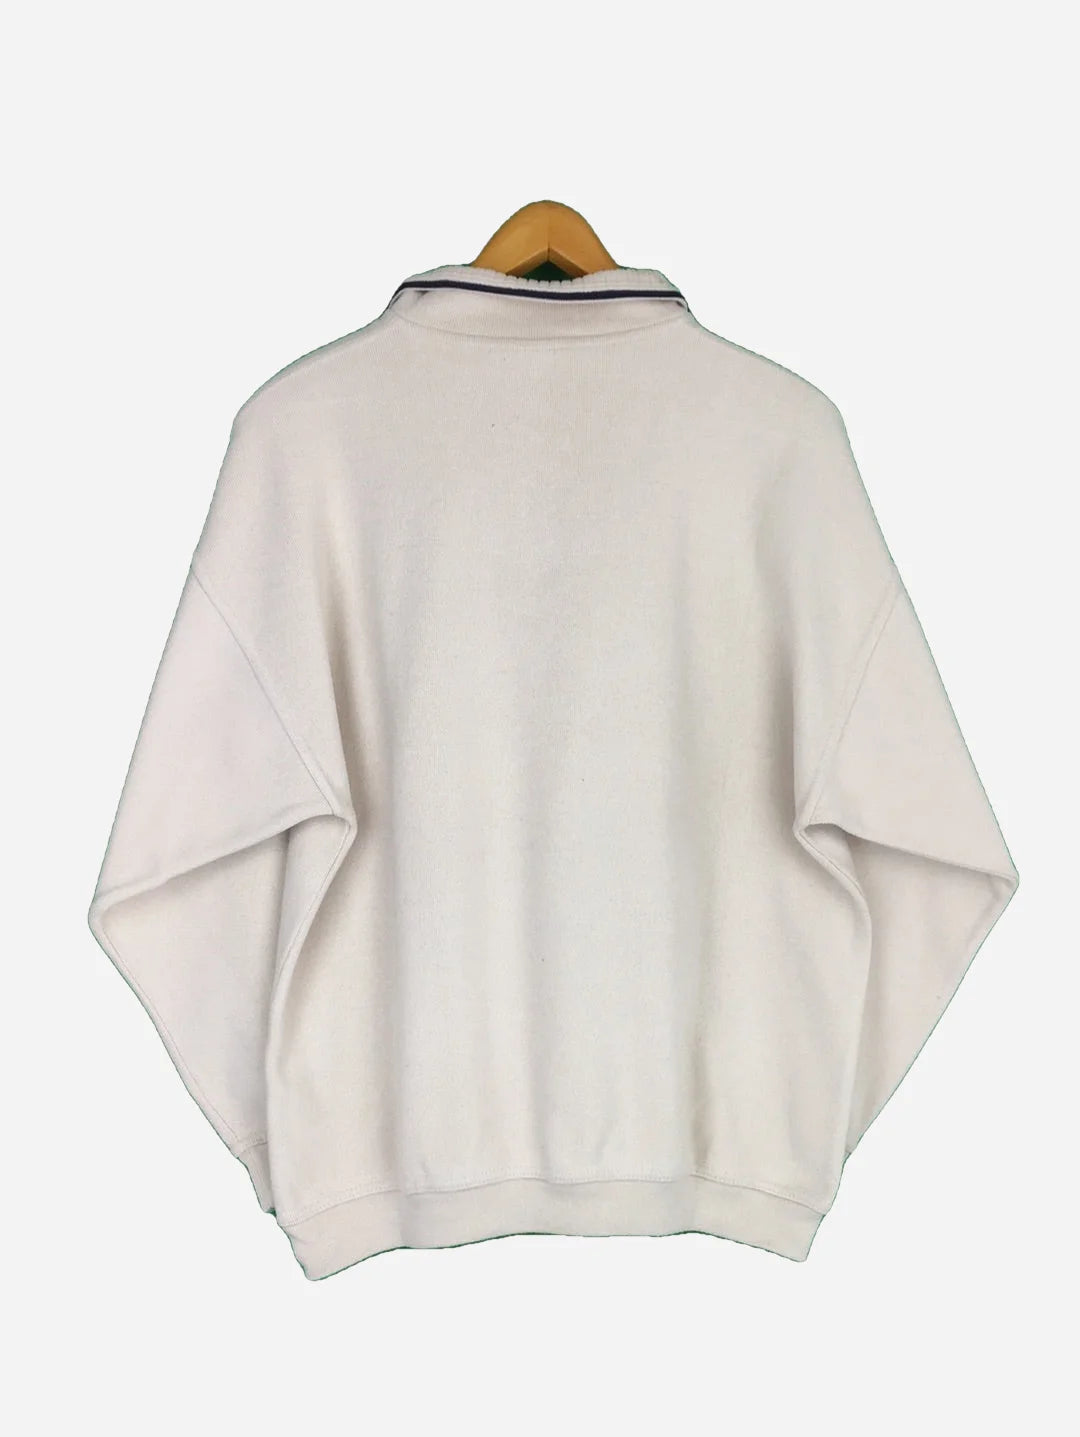 Wind Sweater (M)